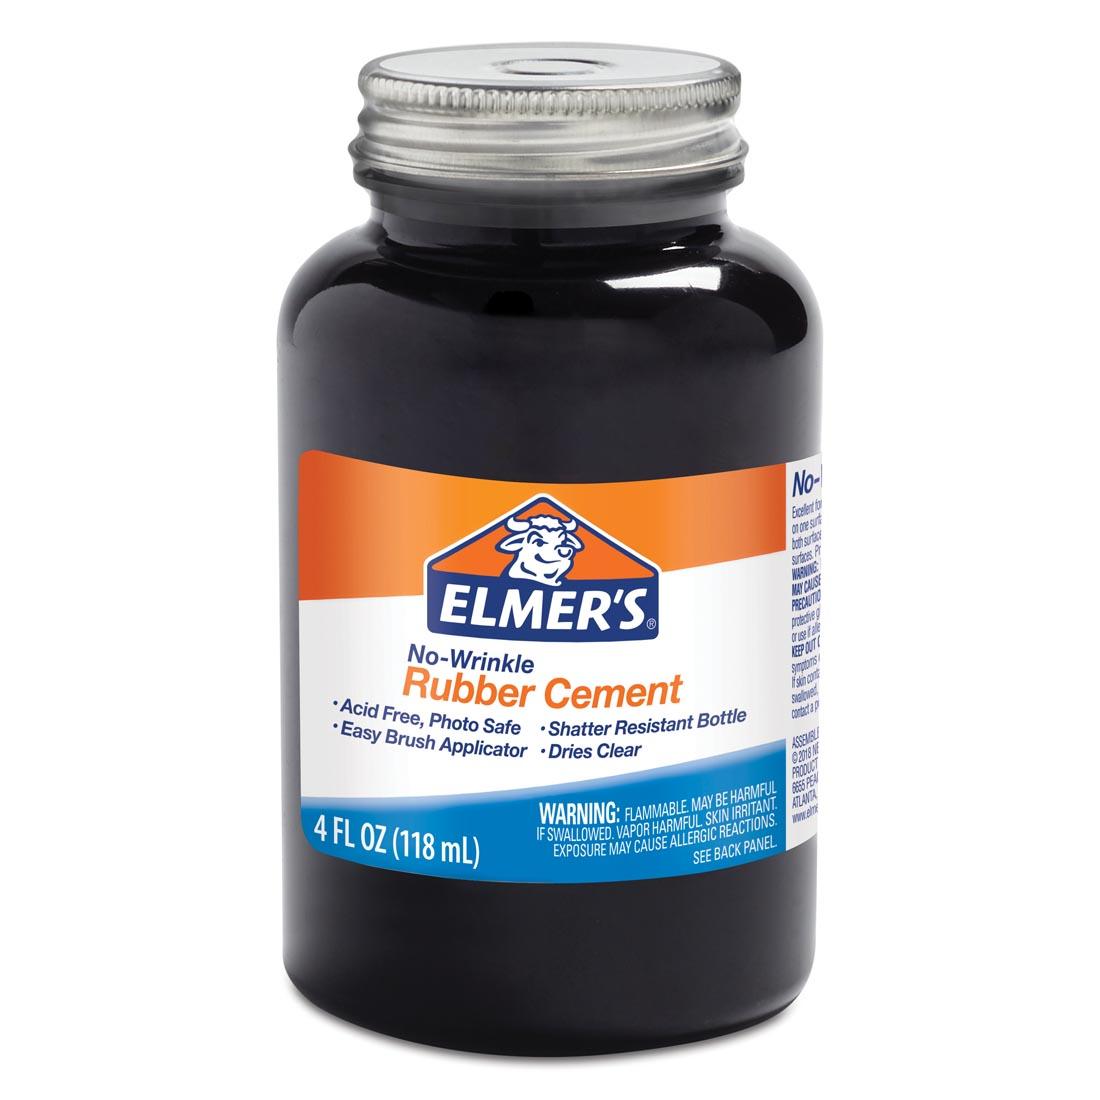 Elmer's No Wrinkle Rubber Cement, in 4 oz jar